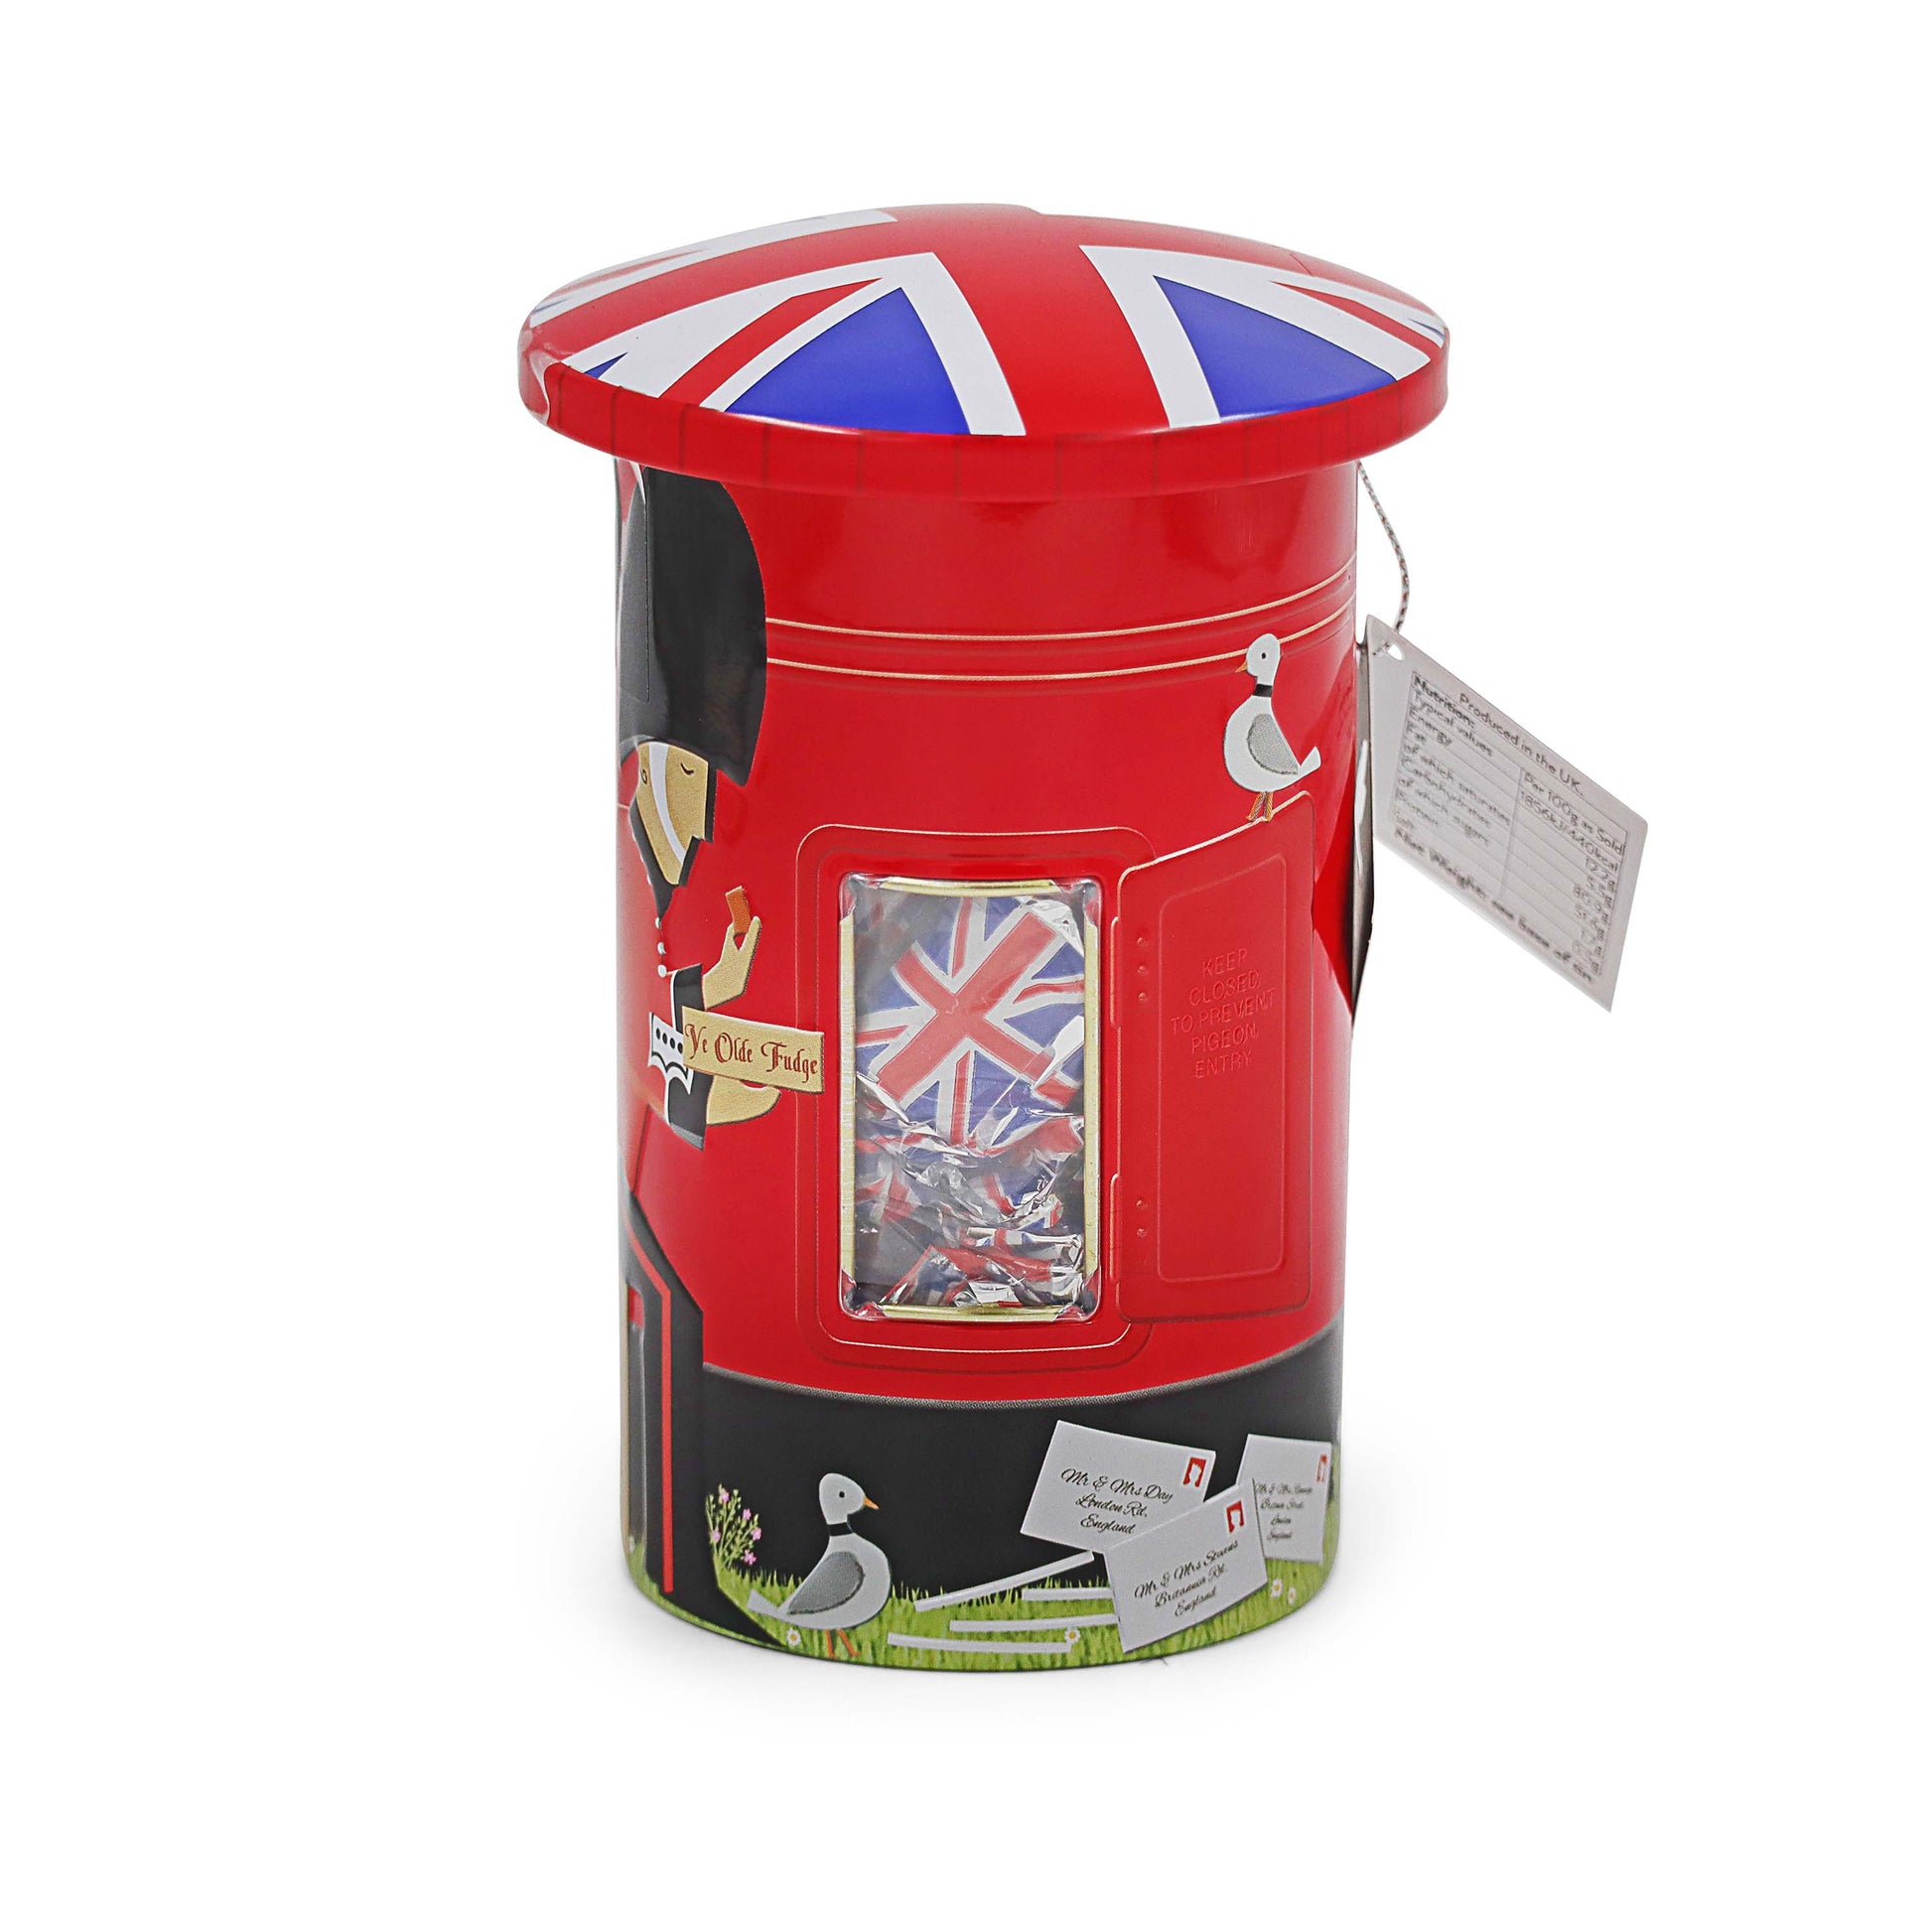 London Souvenir Union Jack Red Post Box Souvenir Vanilla Fudge